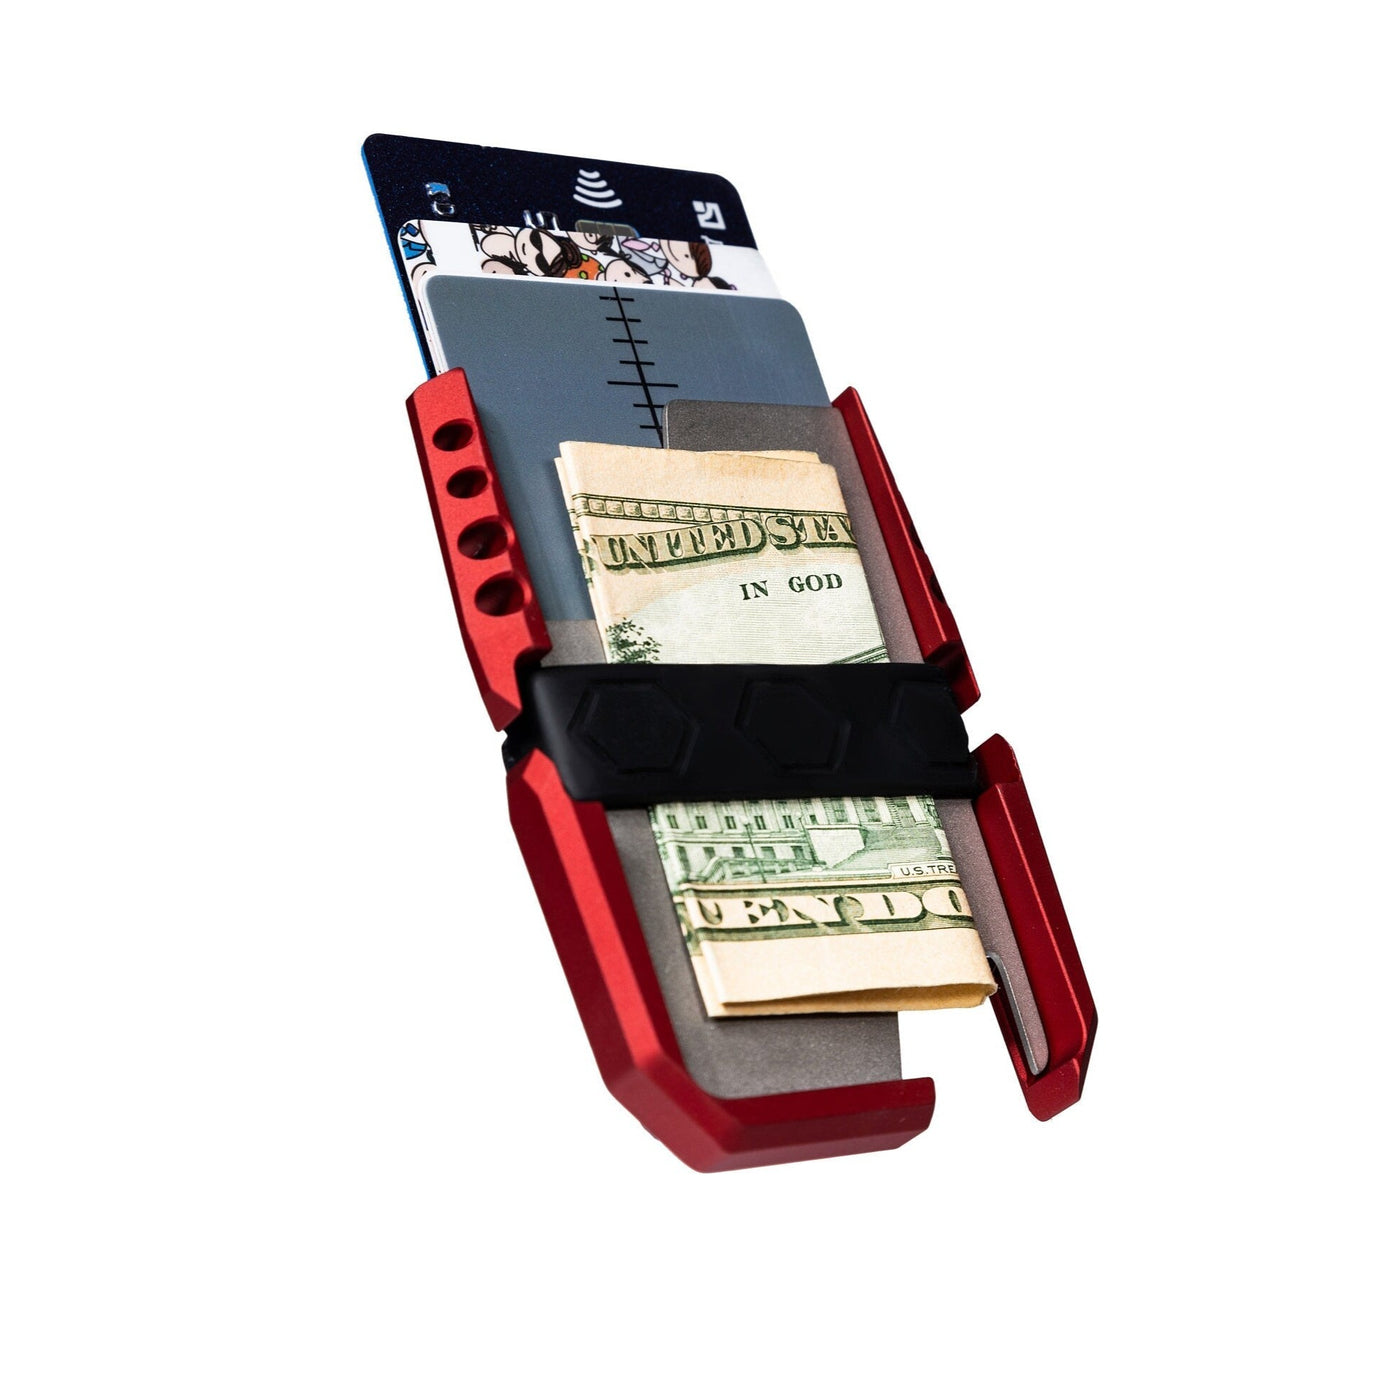 Titanium EDC wallet for everyday carry